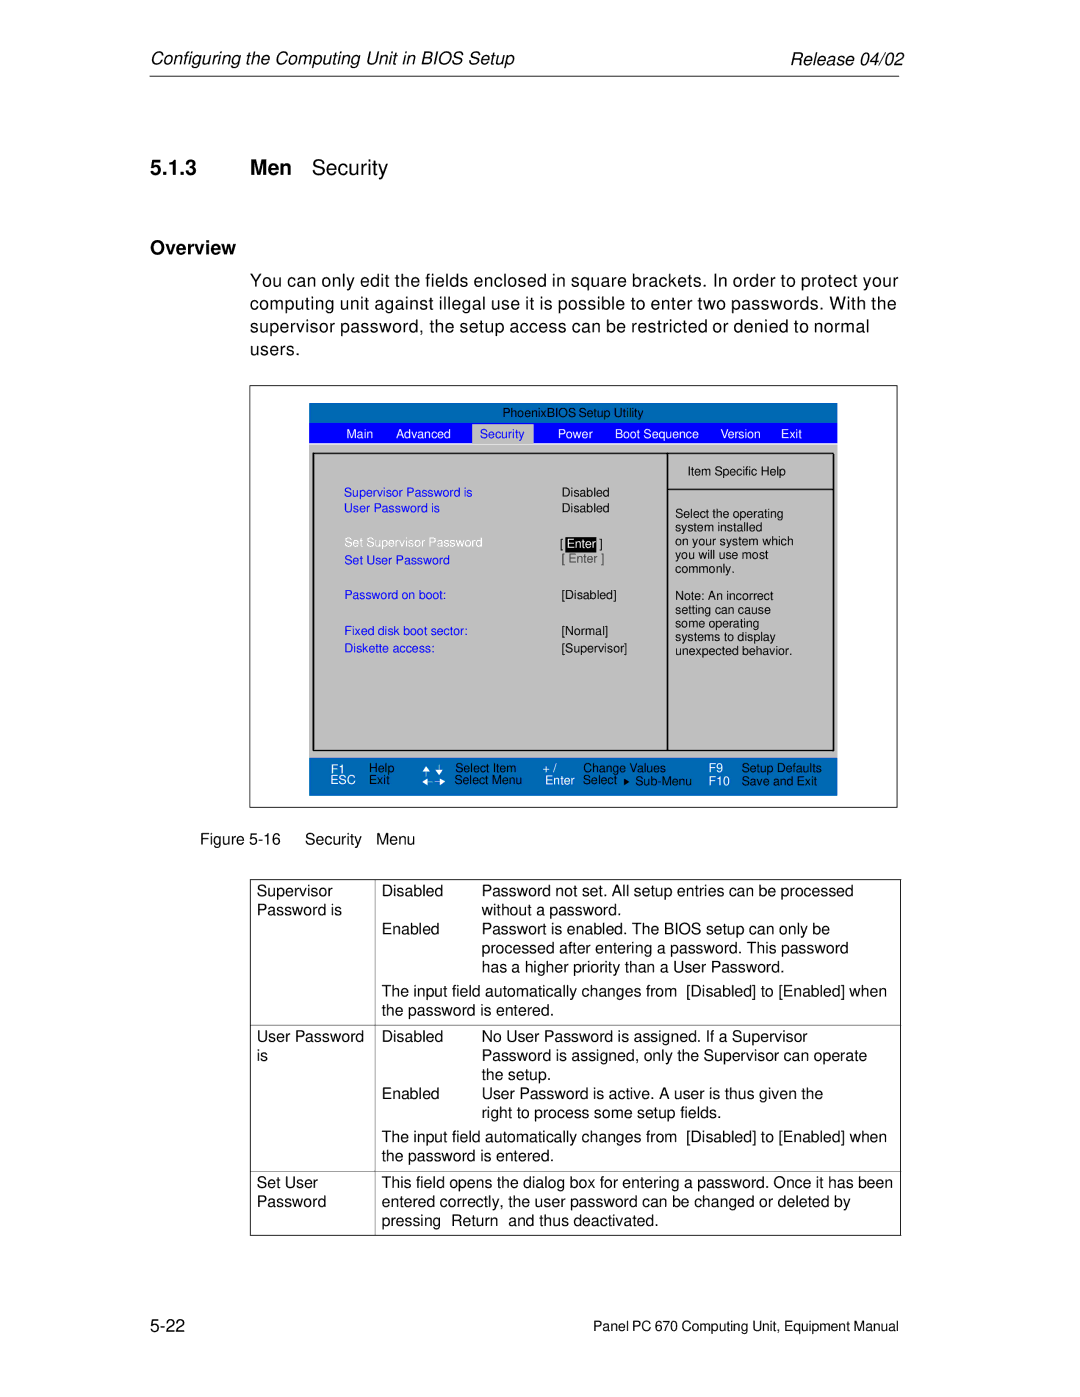 Siemens PC 670 manual 3 Menü Security, Overview 